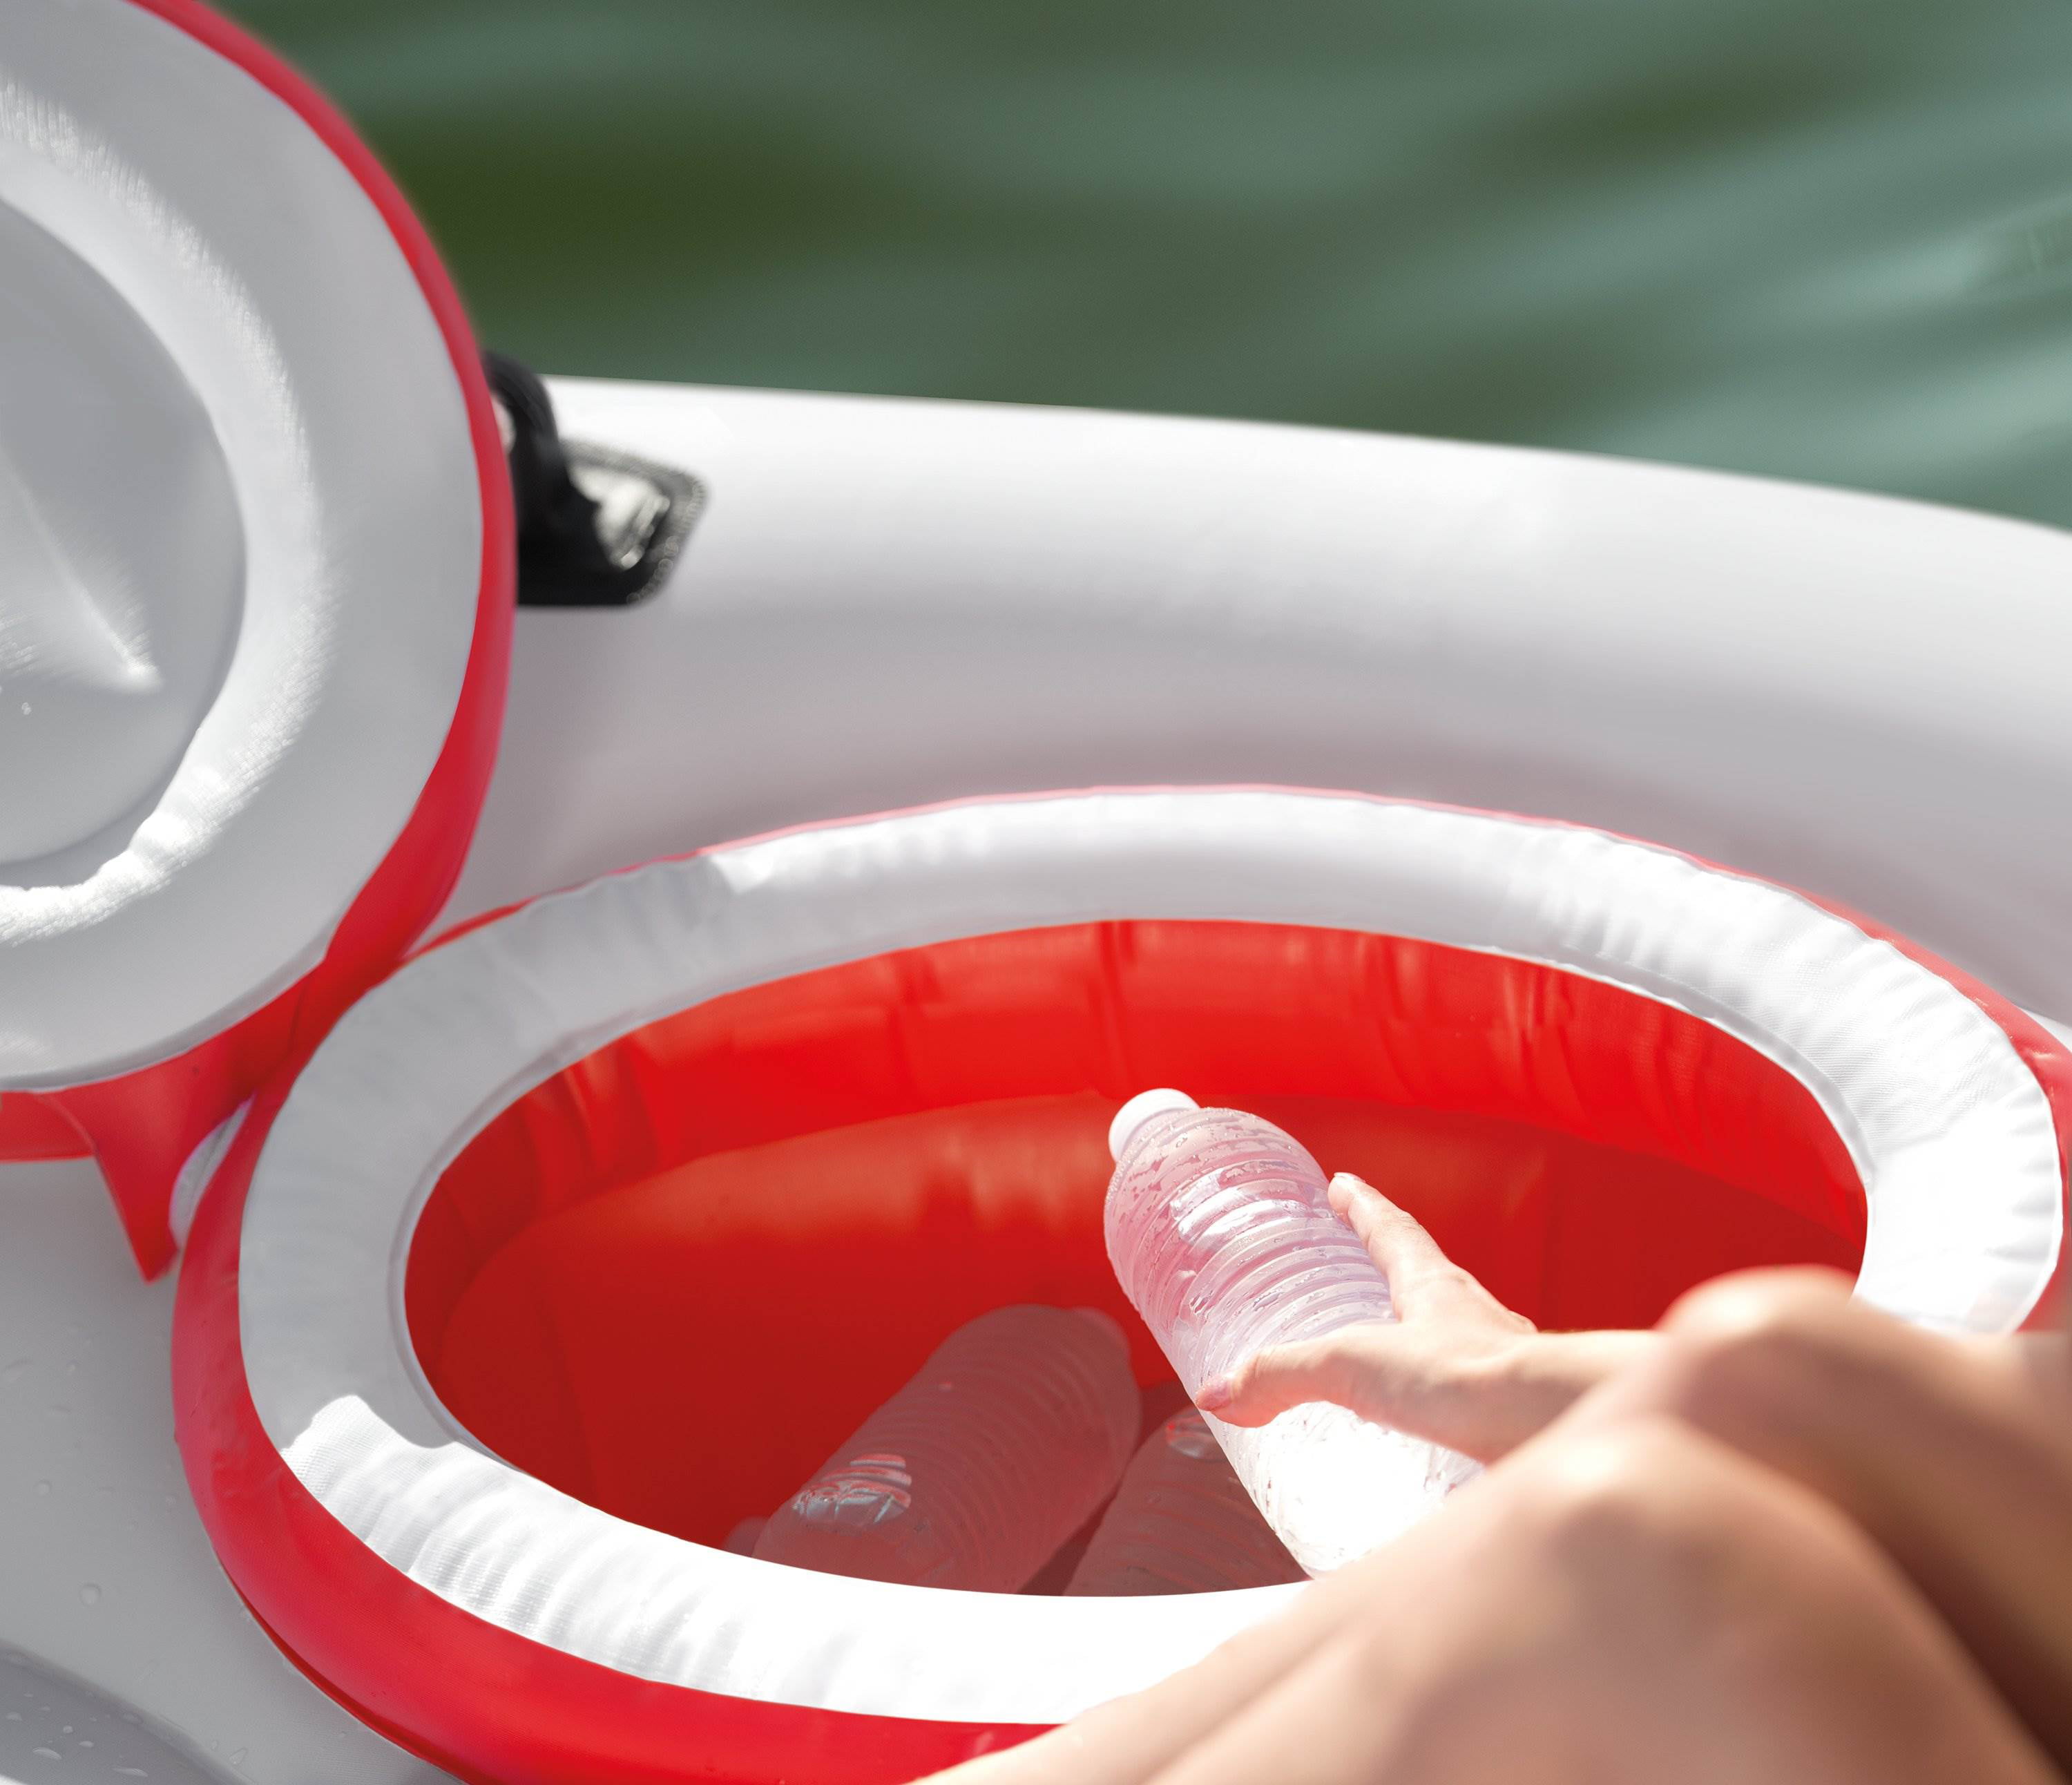 Intex Inflatable Marina Breeze Island Lake Raft with Built-In Cooler56296CA 